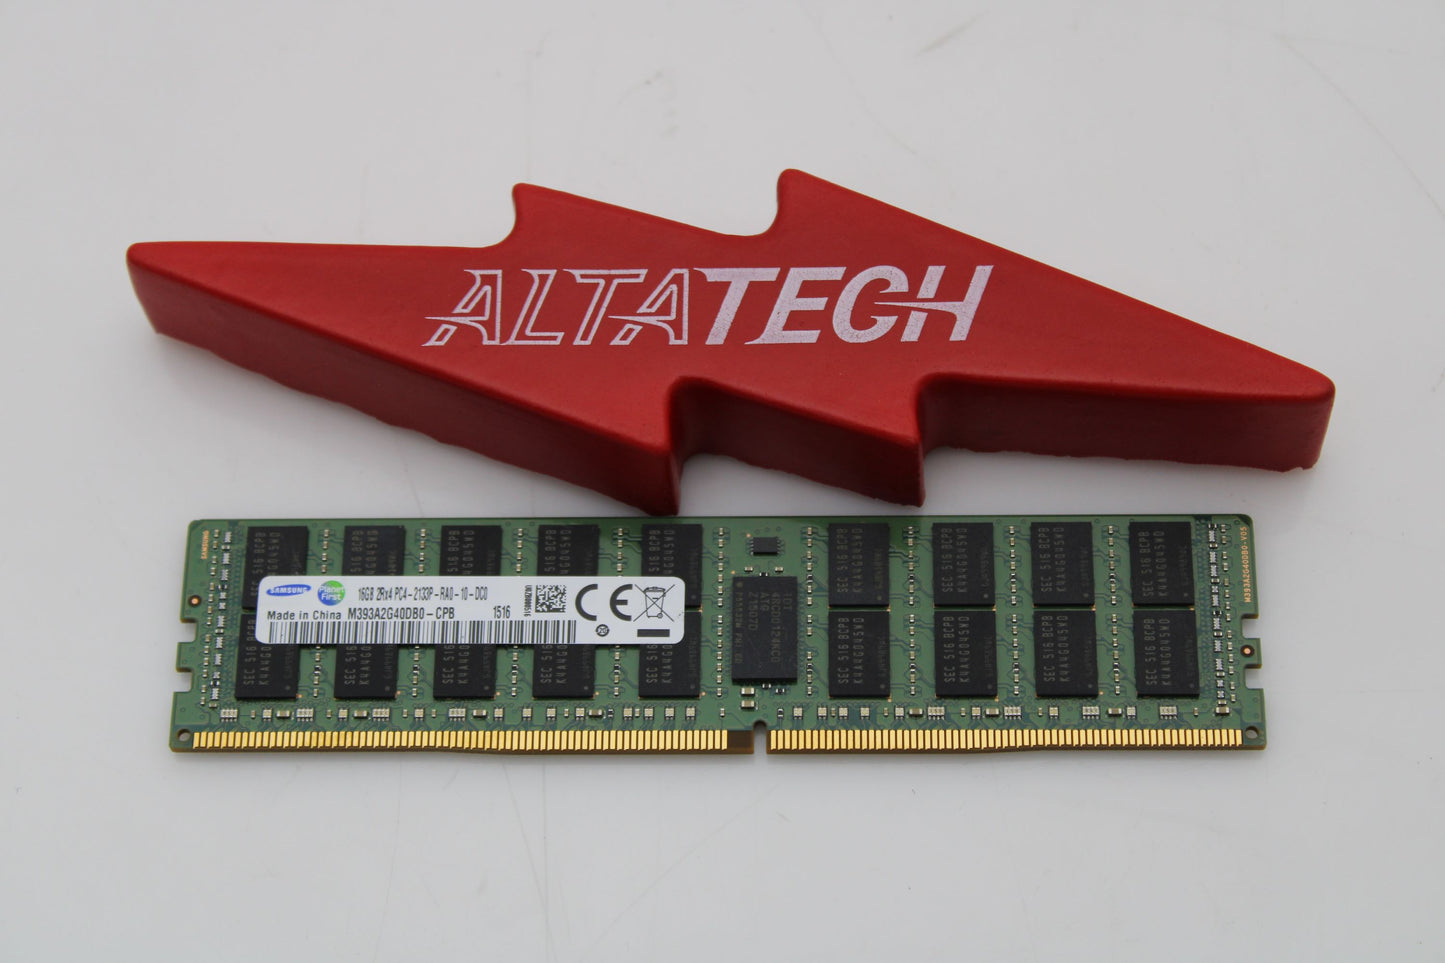 SuperMicro MEM-DR416L-HL01-ER21 16GB PC4-17000P DDR4-2133 2RX4 ECC, Used